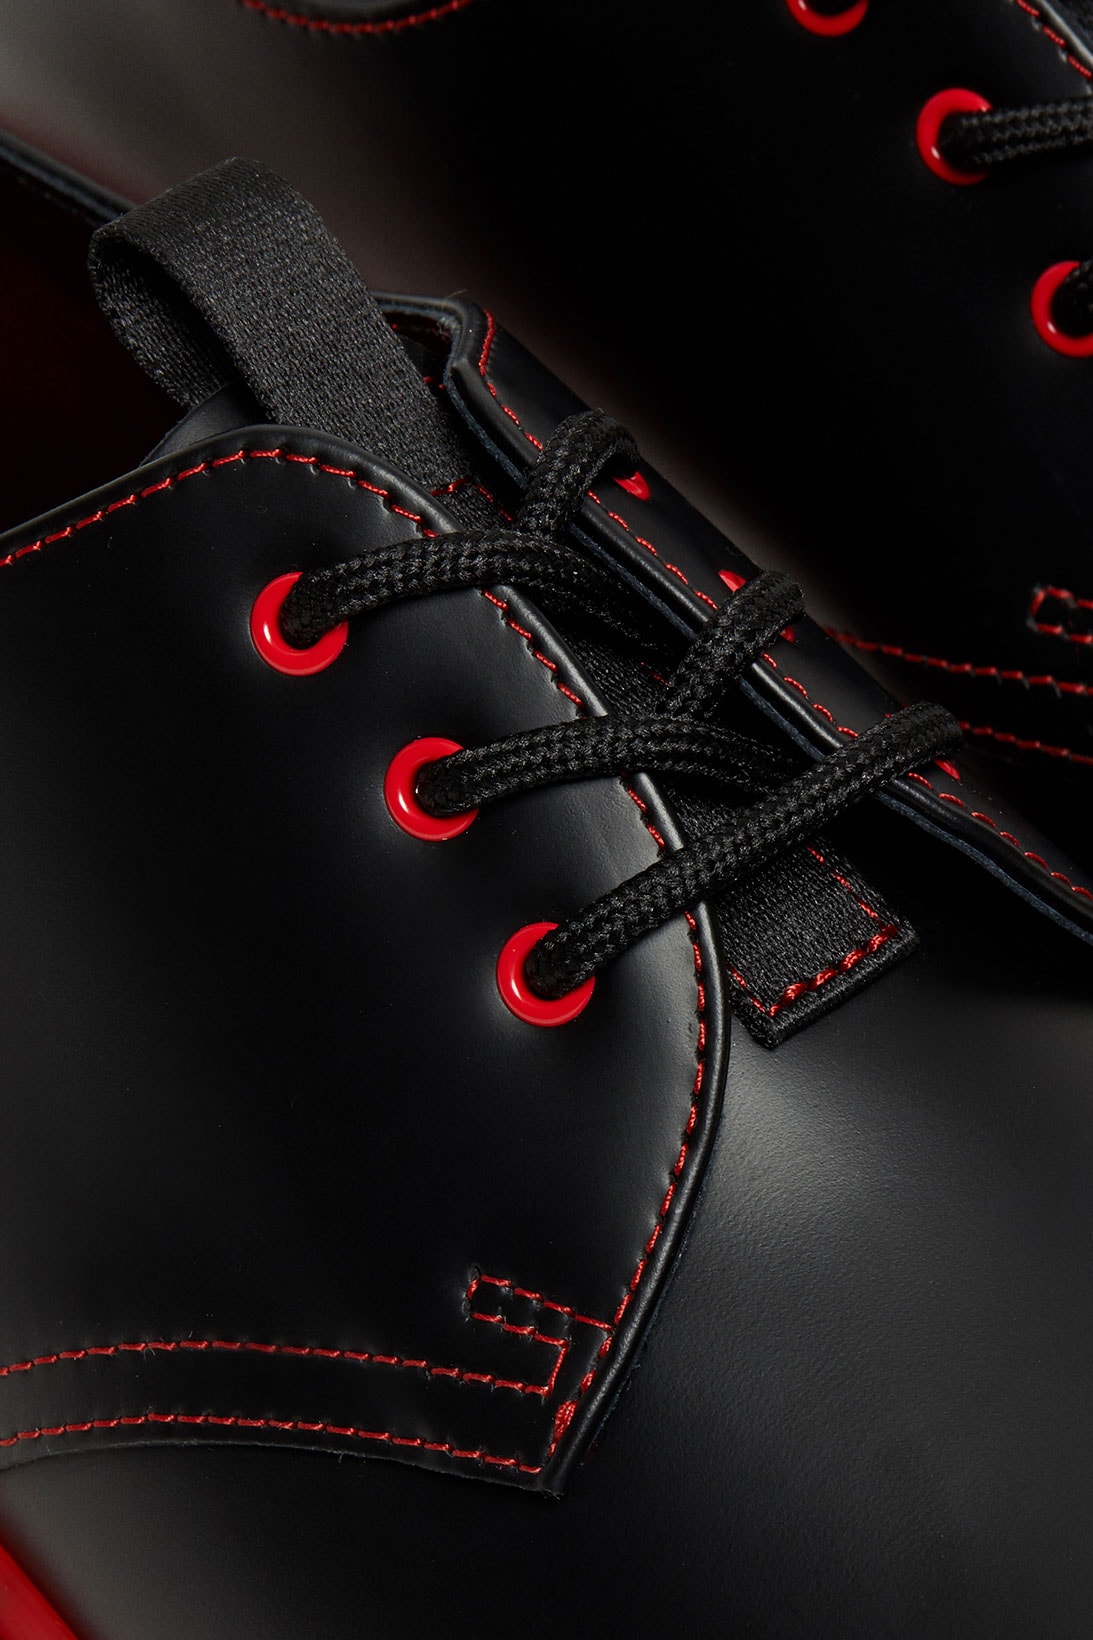 clot dr martens 1461 derby shoes collaboration details eyelets shoelaces